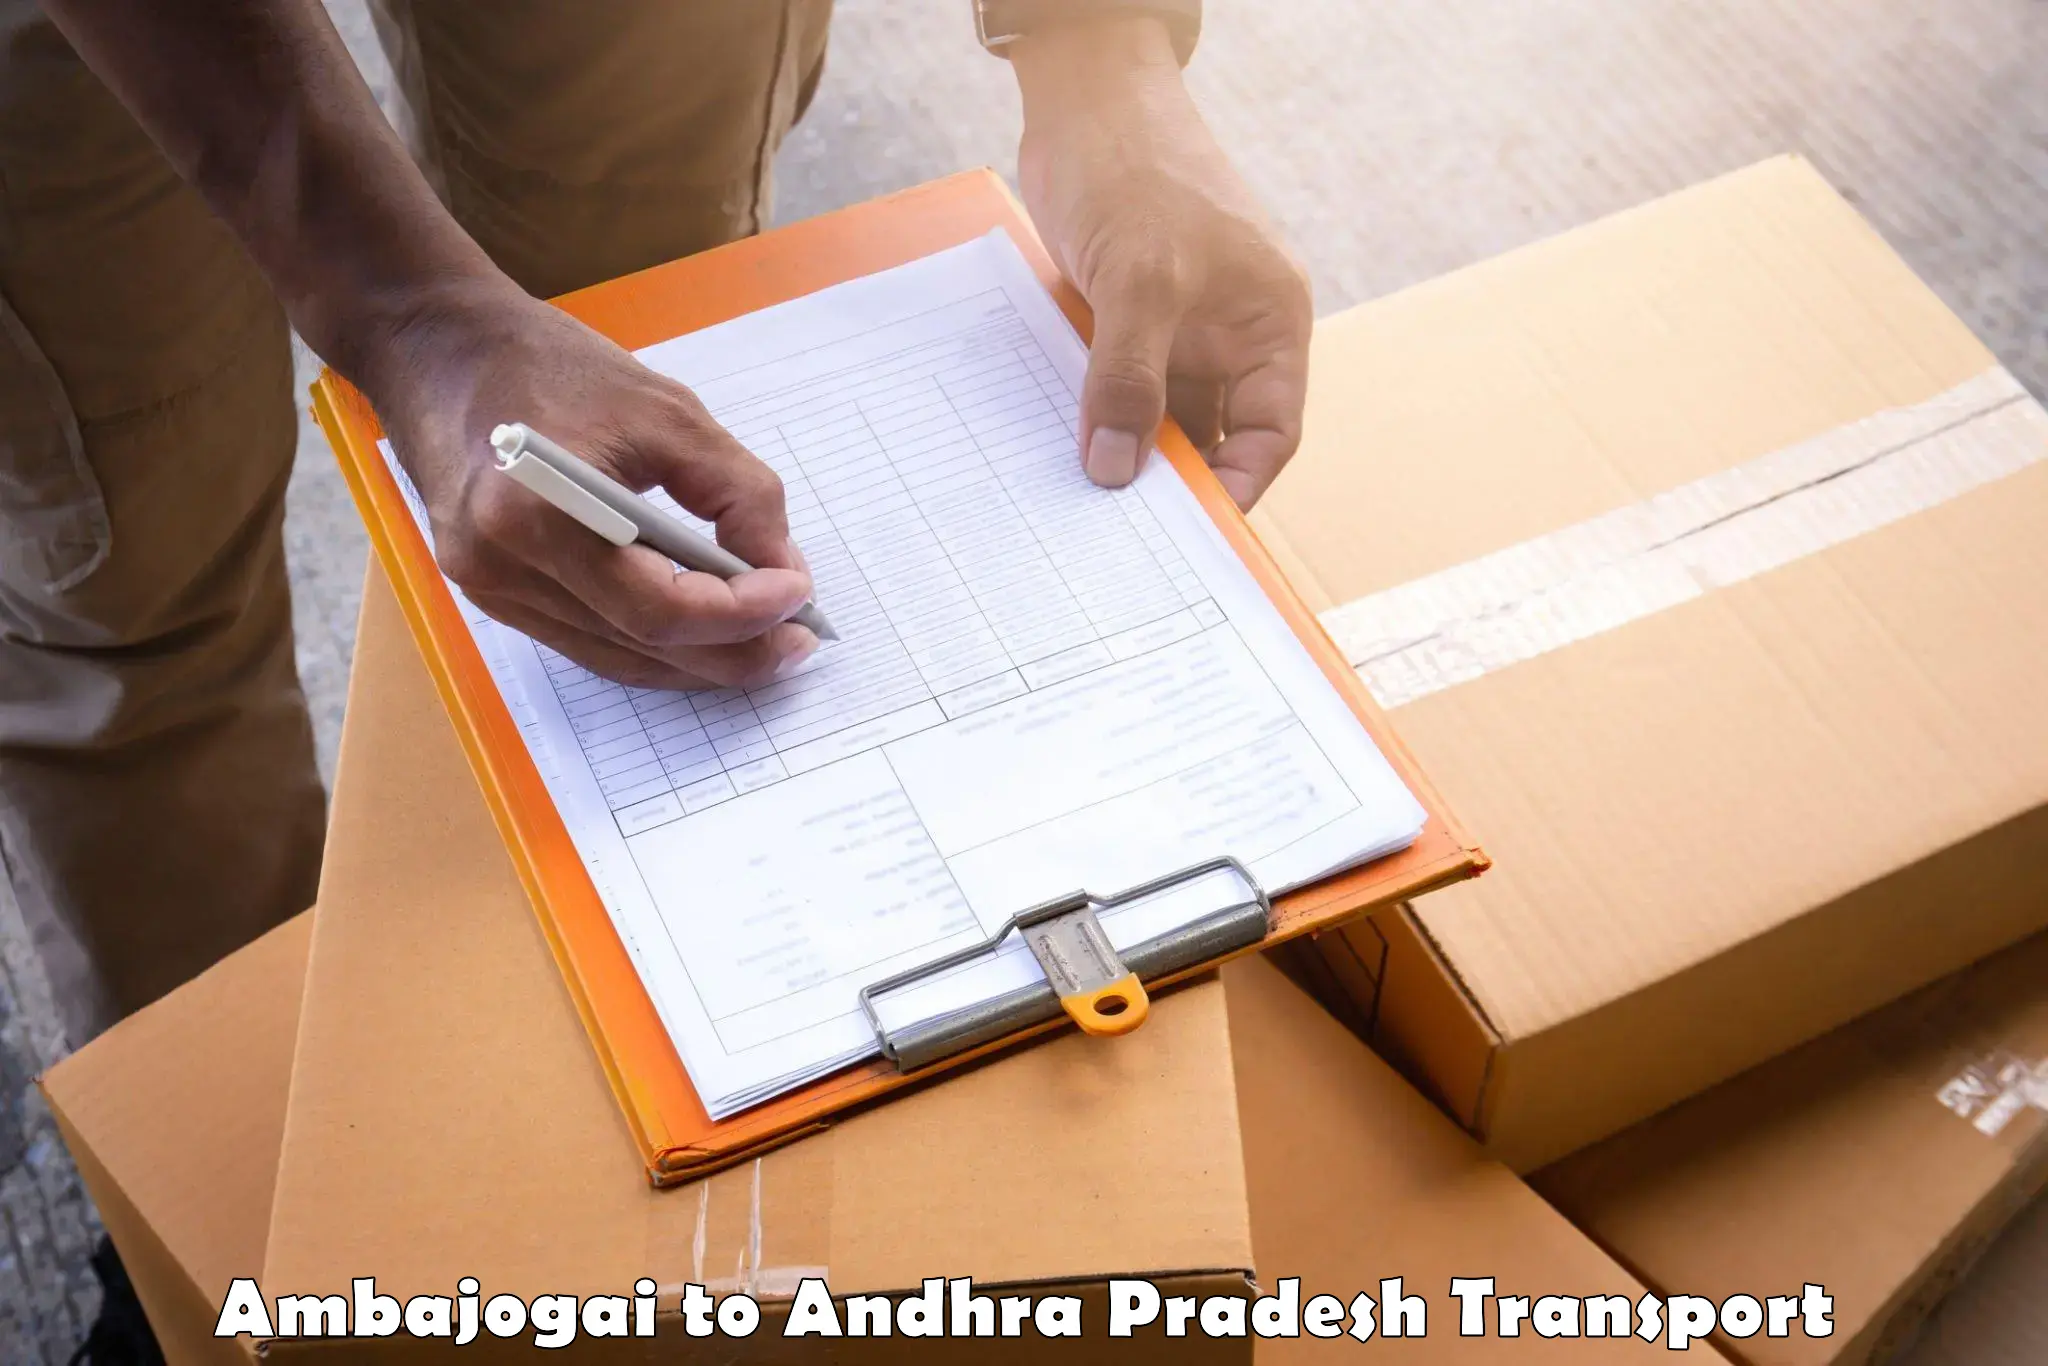 Truck transport companies in India Ambajogai to Piduguralla